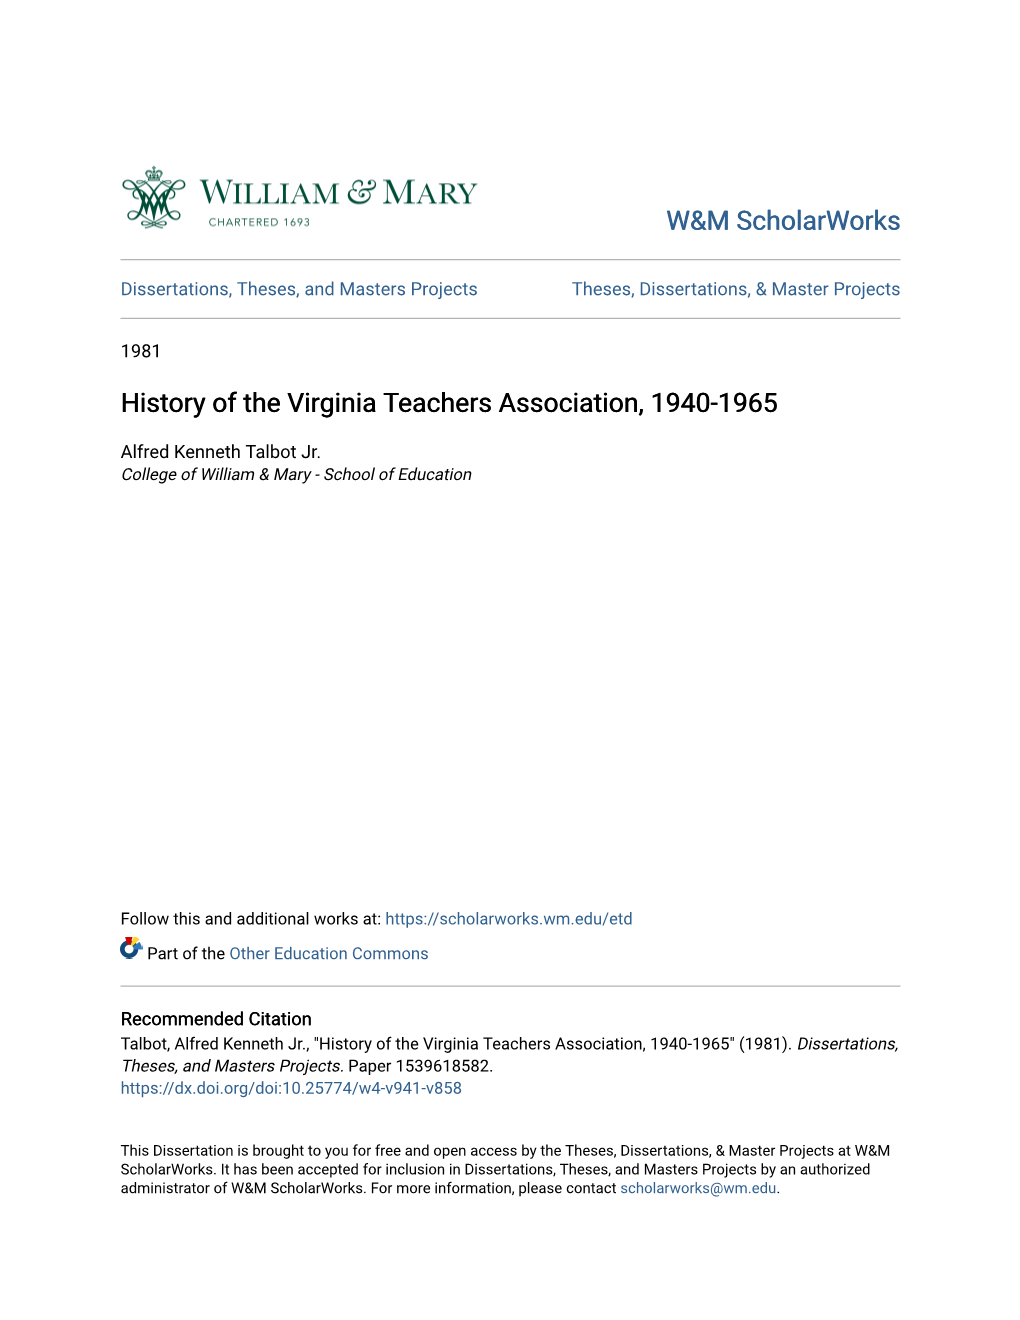 History of the Virginia Teachers Association, 1940-1965